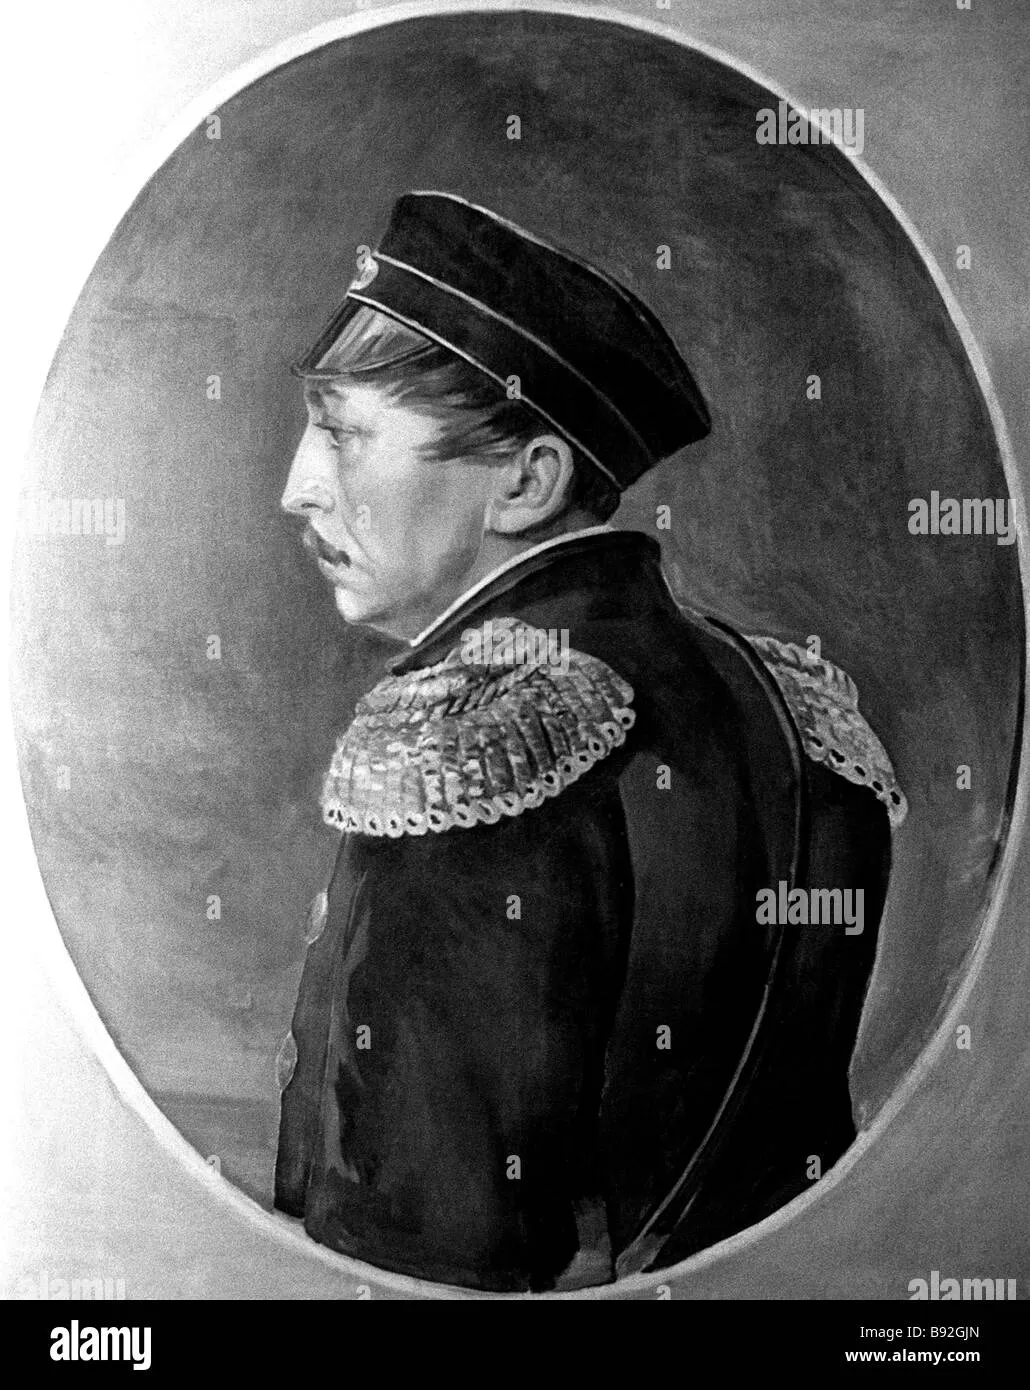 Адмирал Павел Степанович Нахимов